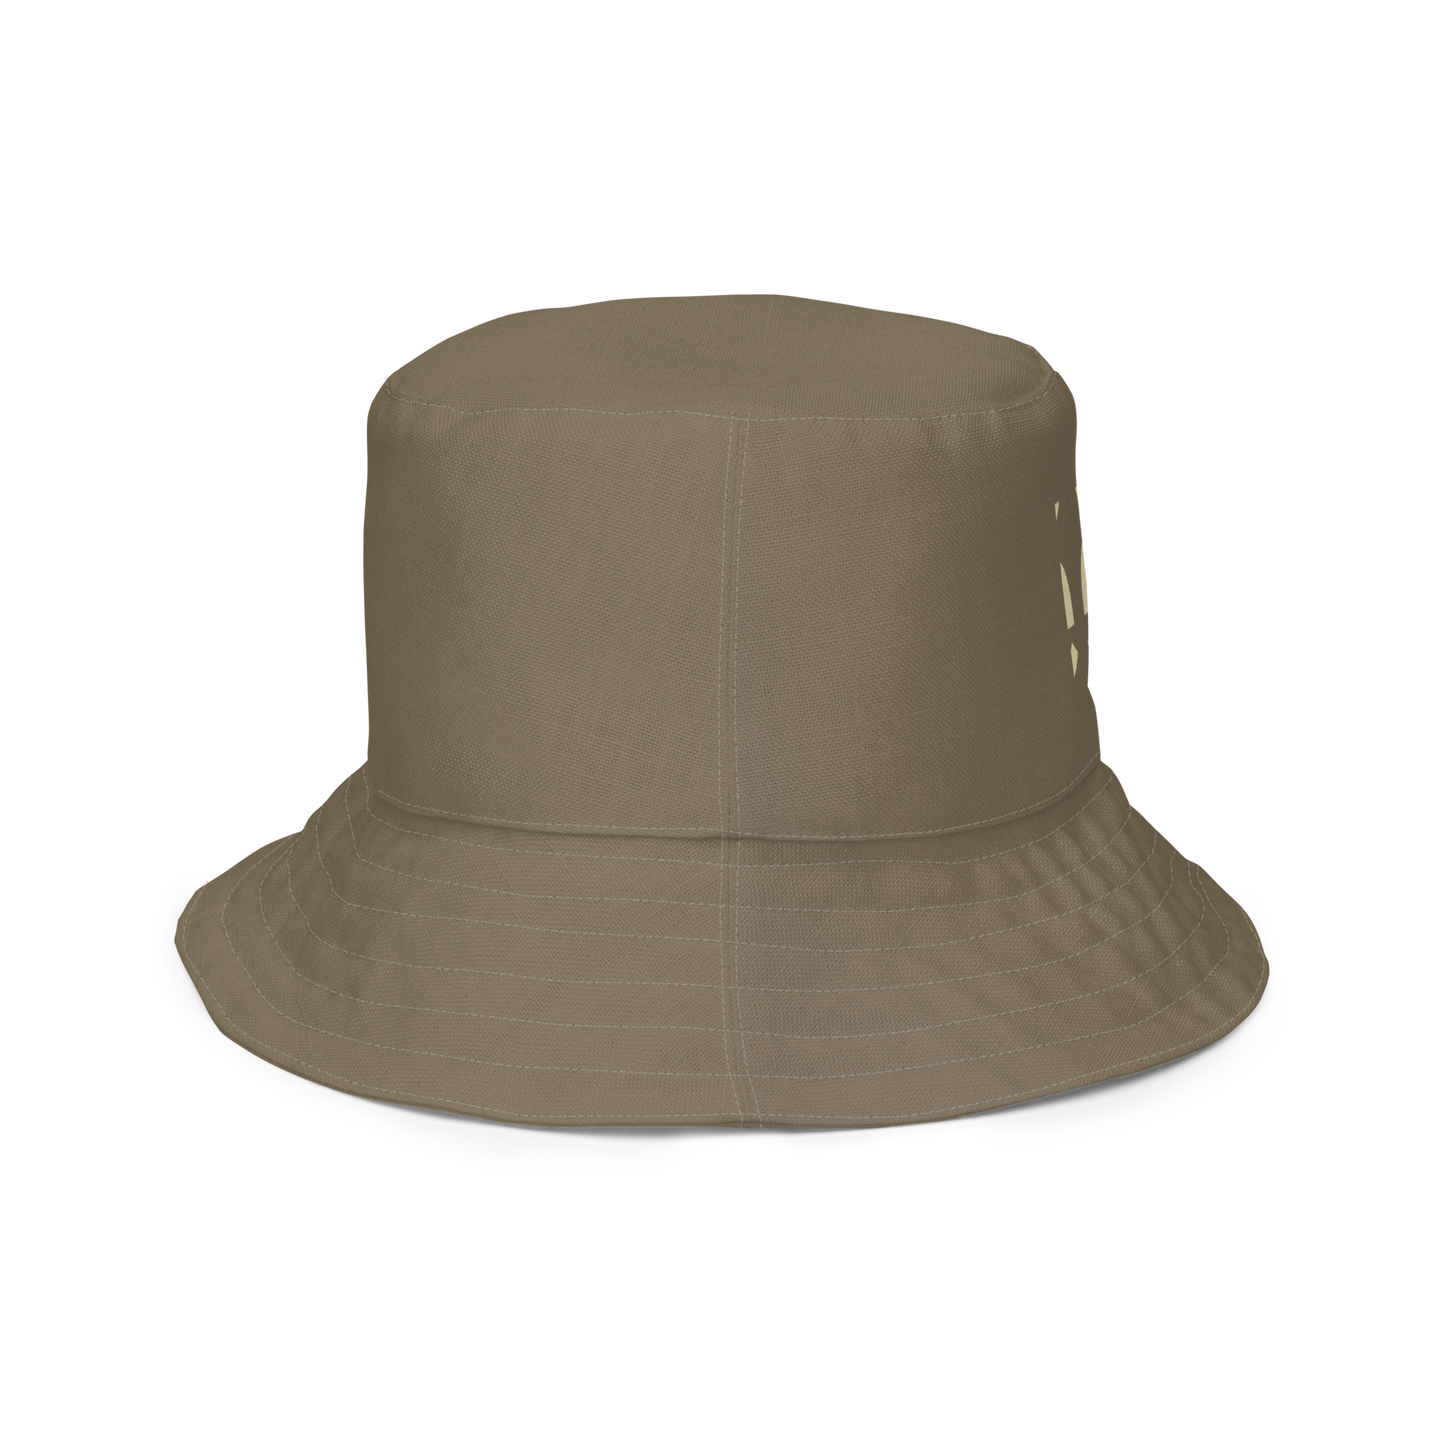 Reversible bucket hat Frank Libéria